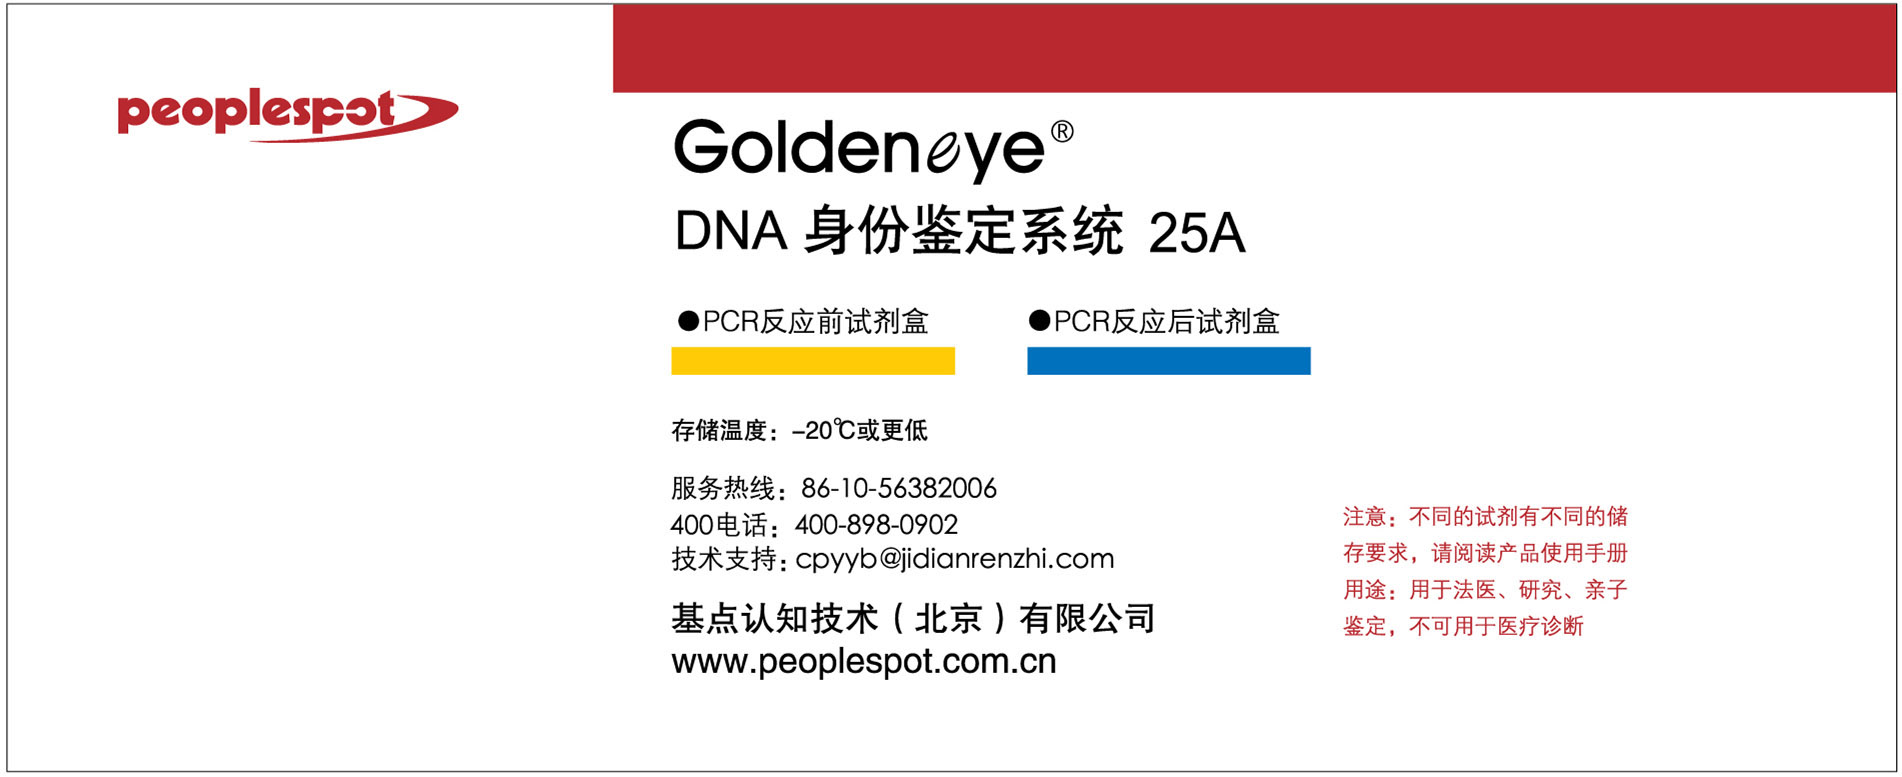 Goldeneye®DNA身份鉴定系统25A